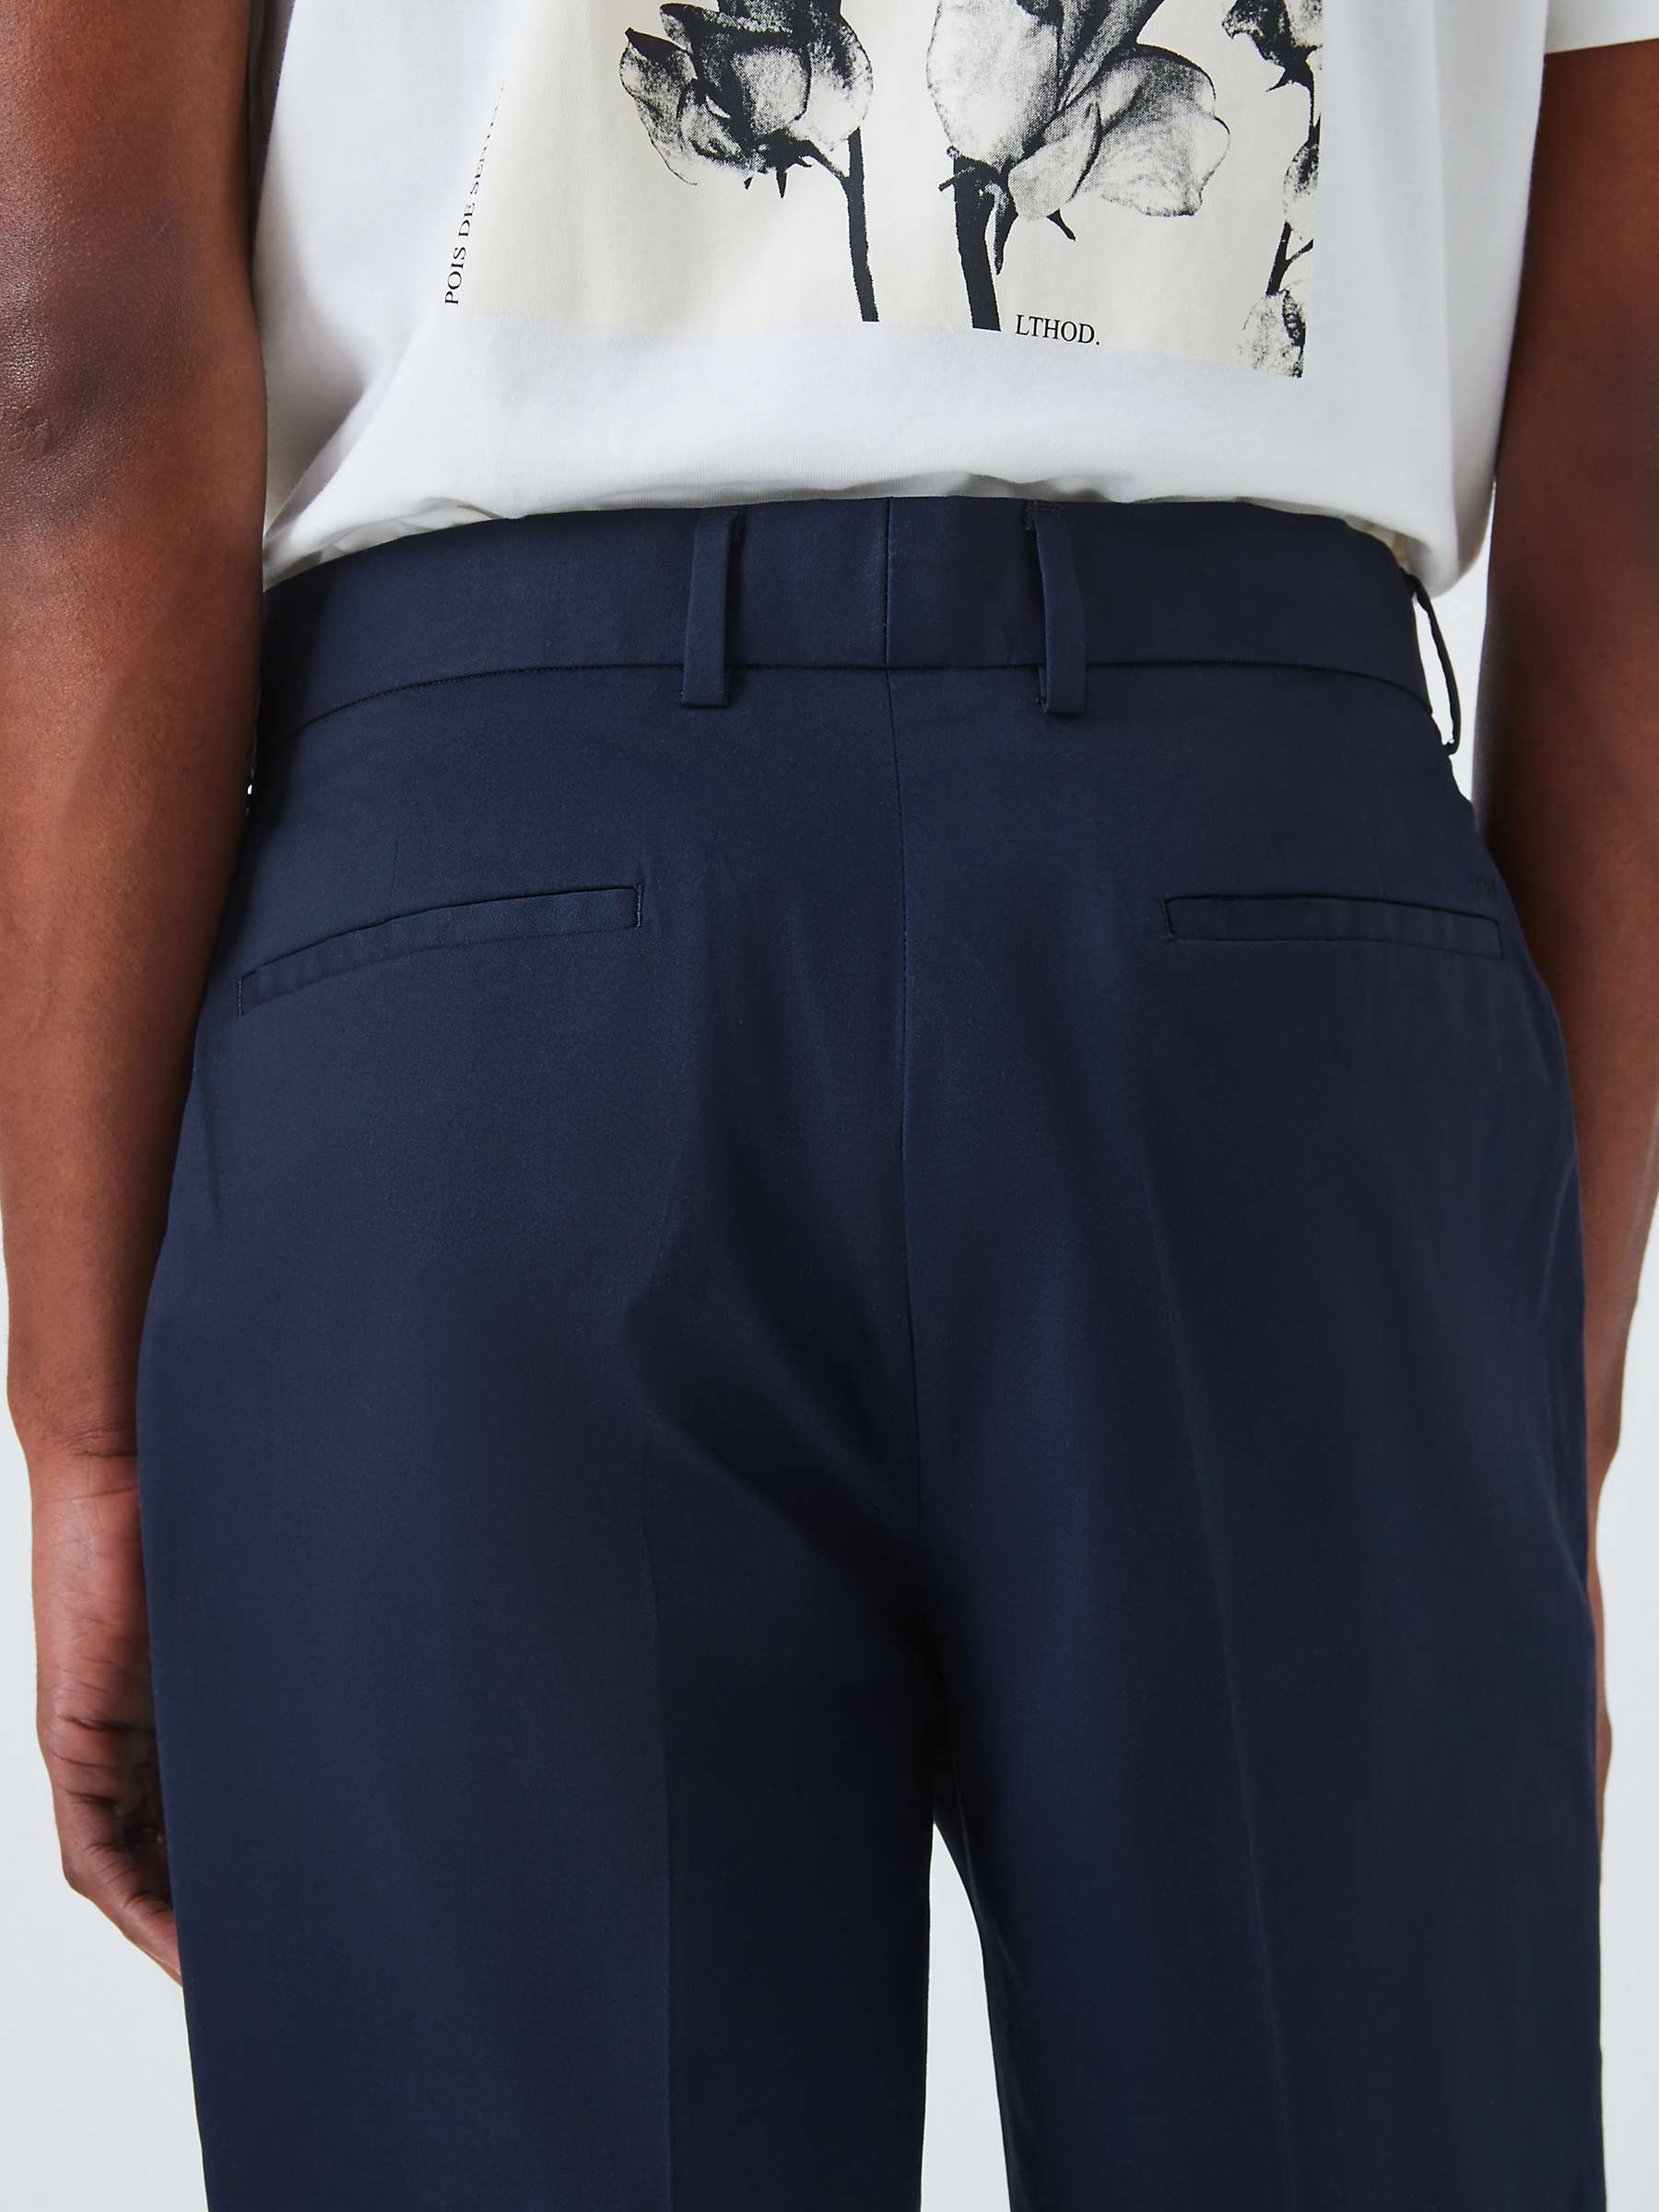 Buy Kin Cotton Blend Chino Shorts Online at johnlewis.com